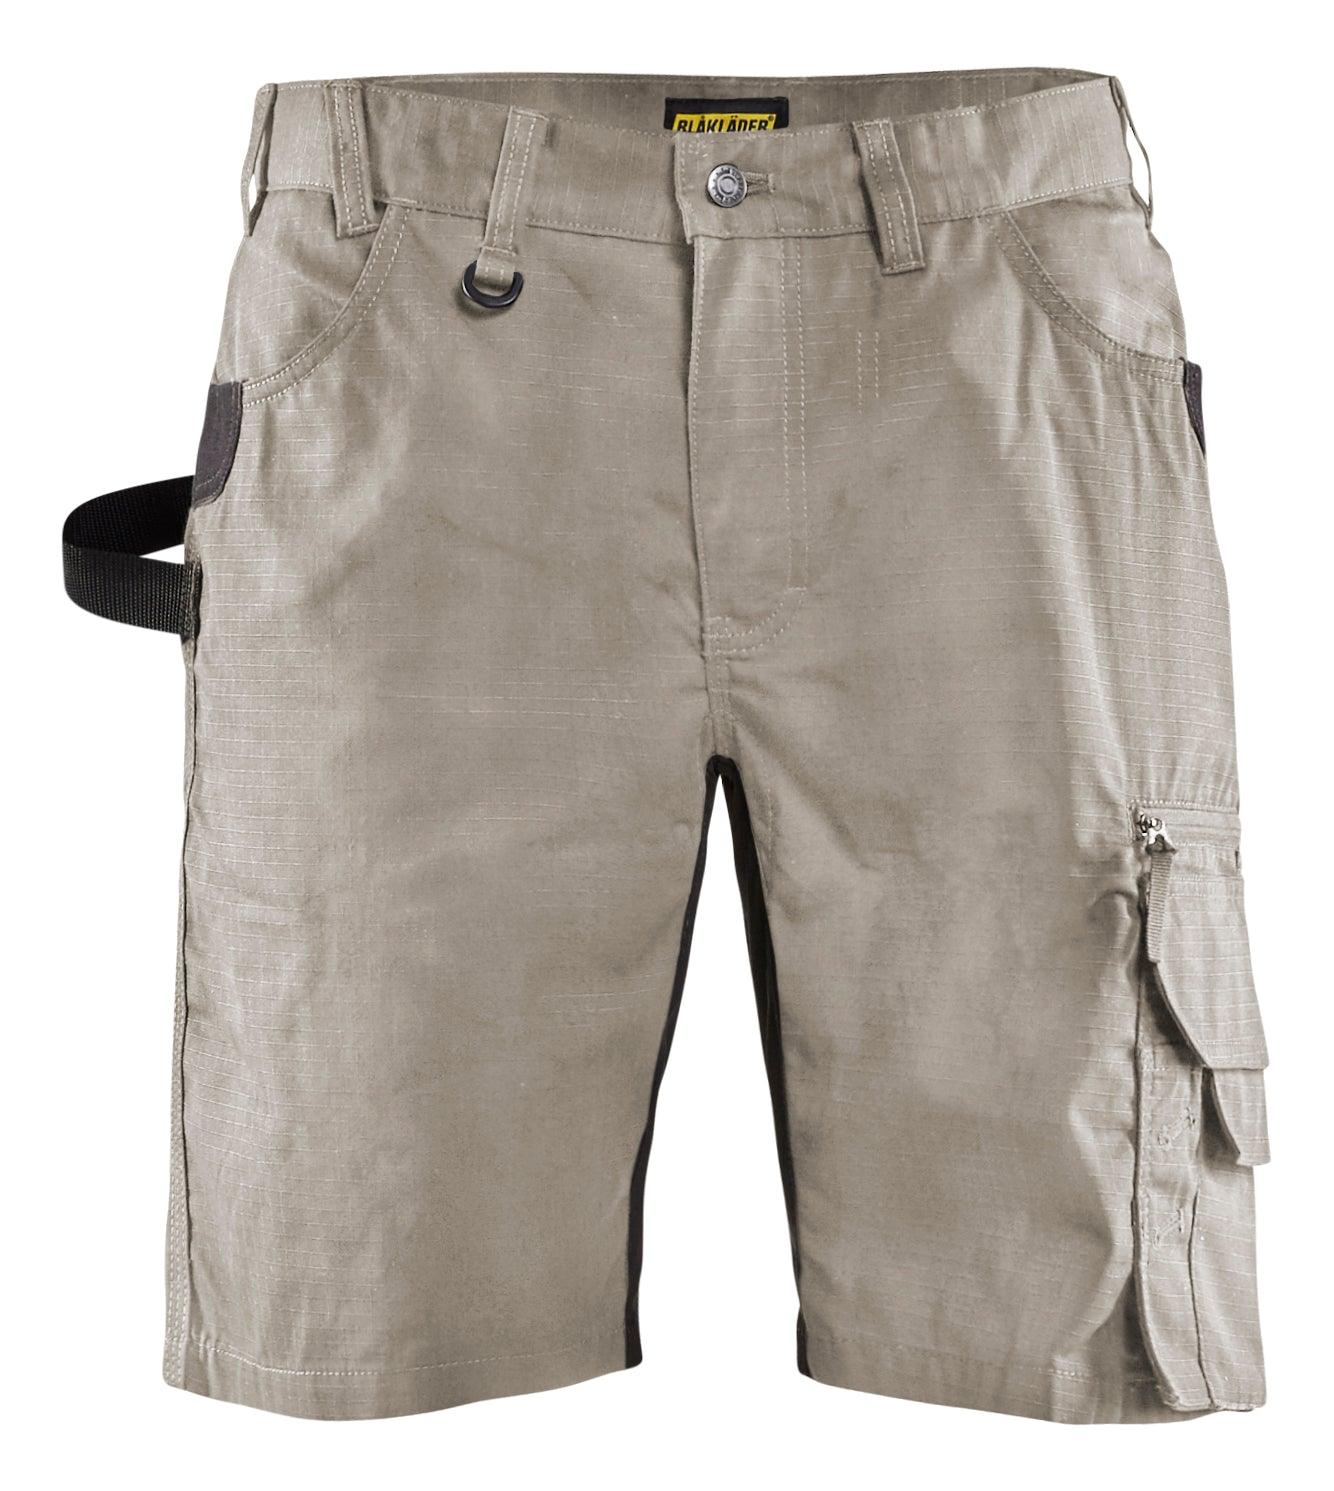 Blaklader 1638 7oz Rip Stop Shorts - Stone - Trusted Gear Company LLC